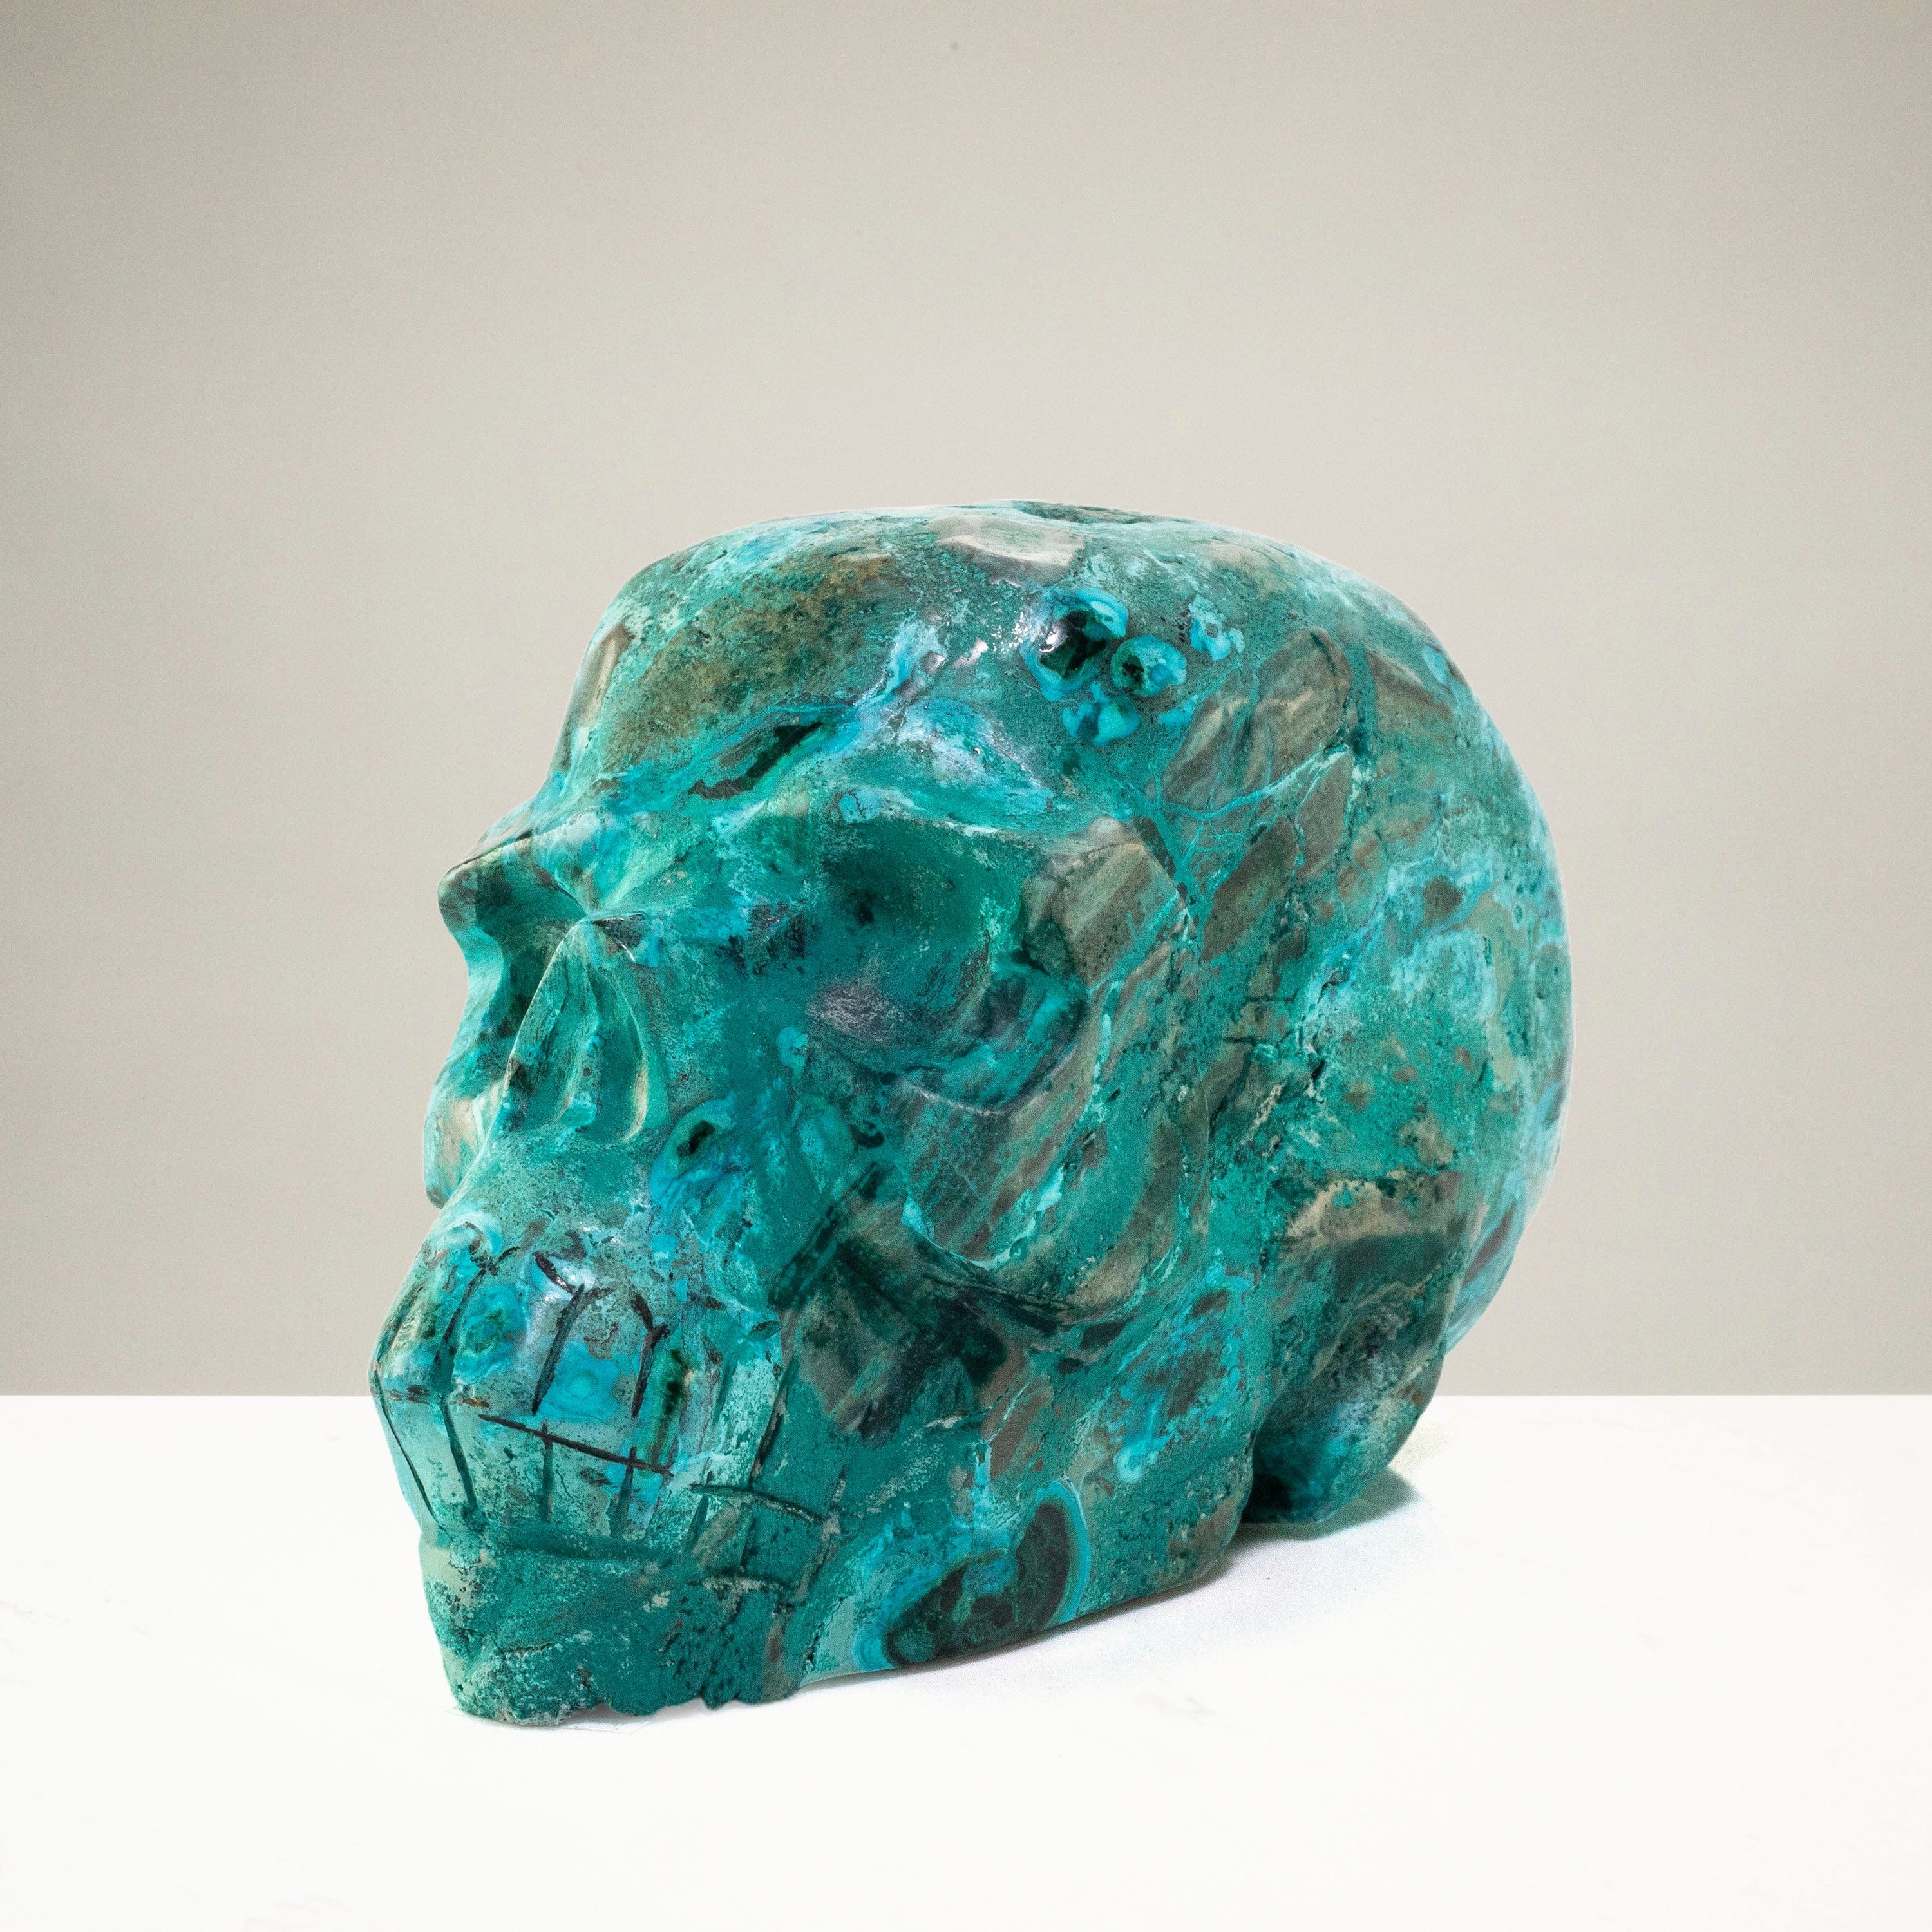 Kalifano Malachite Chrysocolla Skull Carving 4" / 477g SK1800-CRY.001